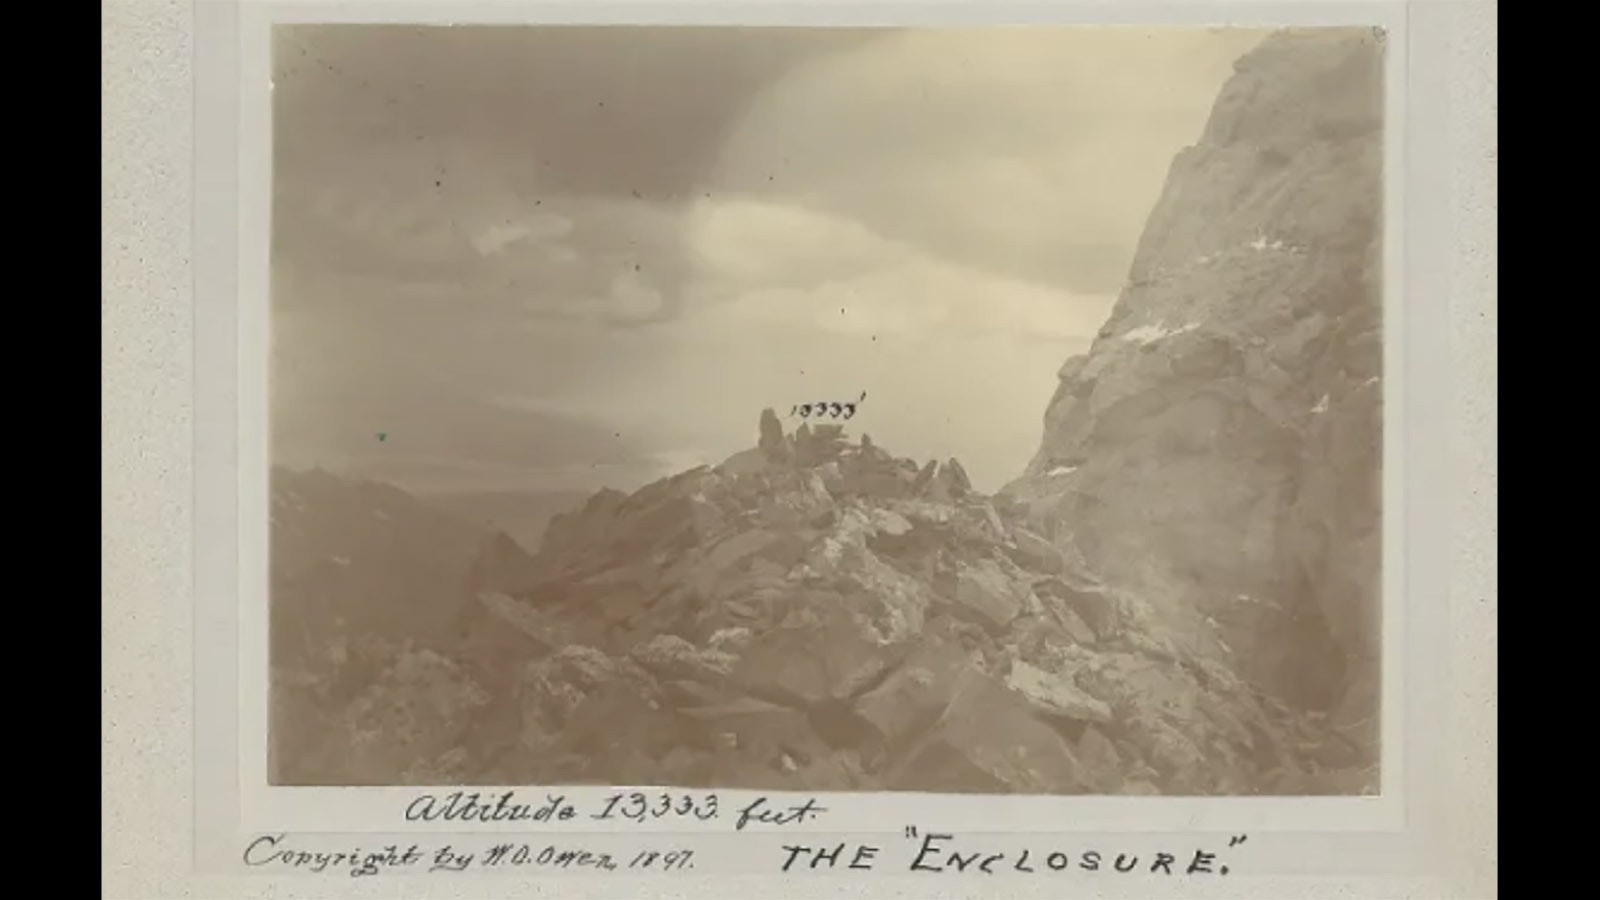 William Owen's photo of the Enclosure on Grand Teton.